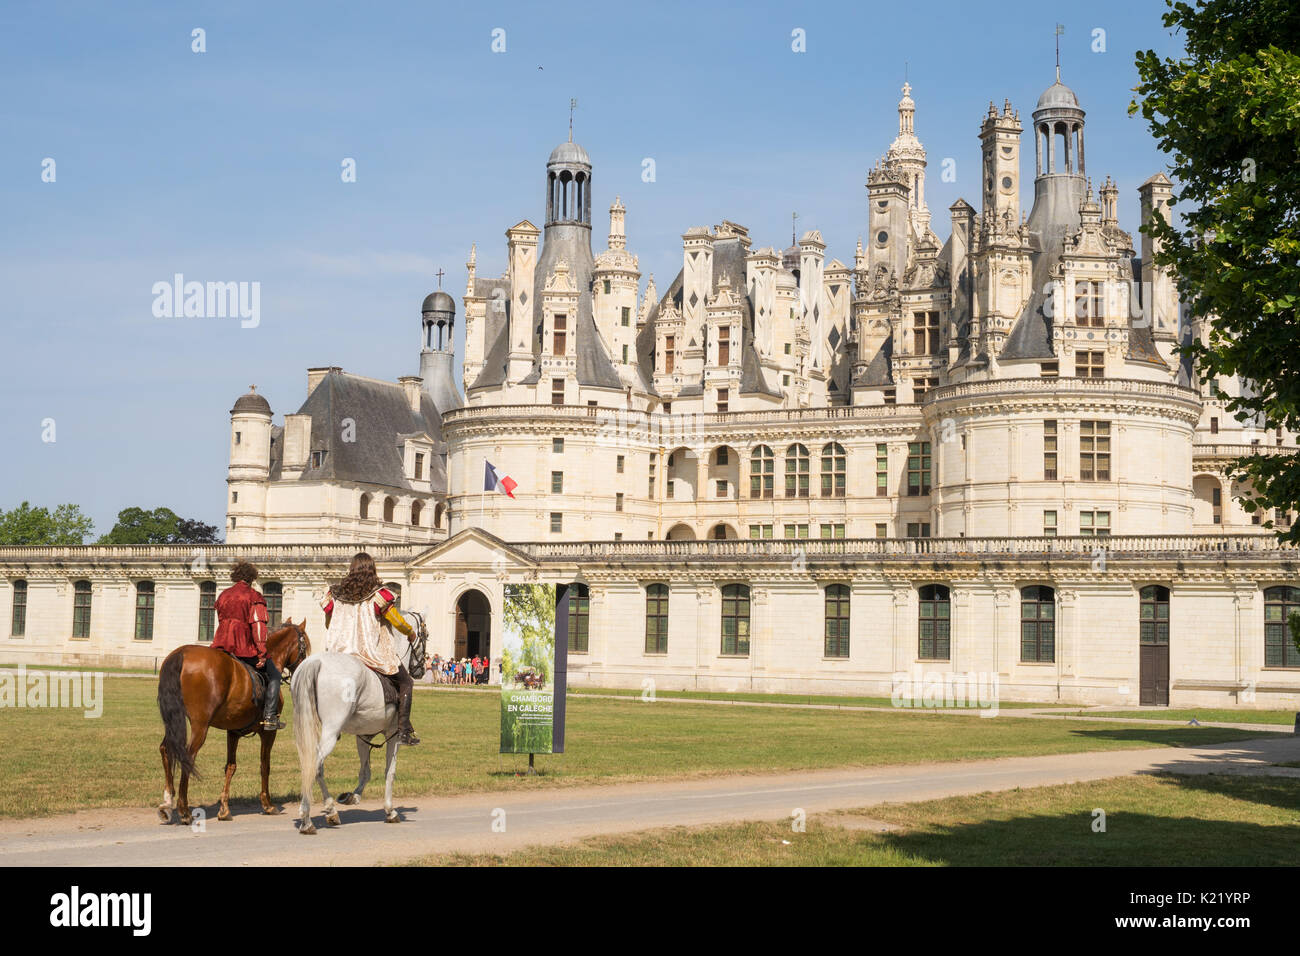 La recreacion historica a caballo en la fachada sur del château de Chambord, Loir-et-Cher, Francia, Europa Foto de stock